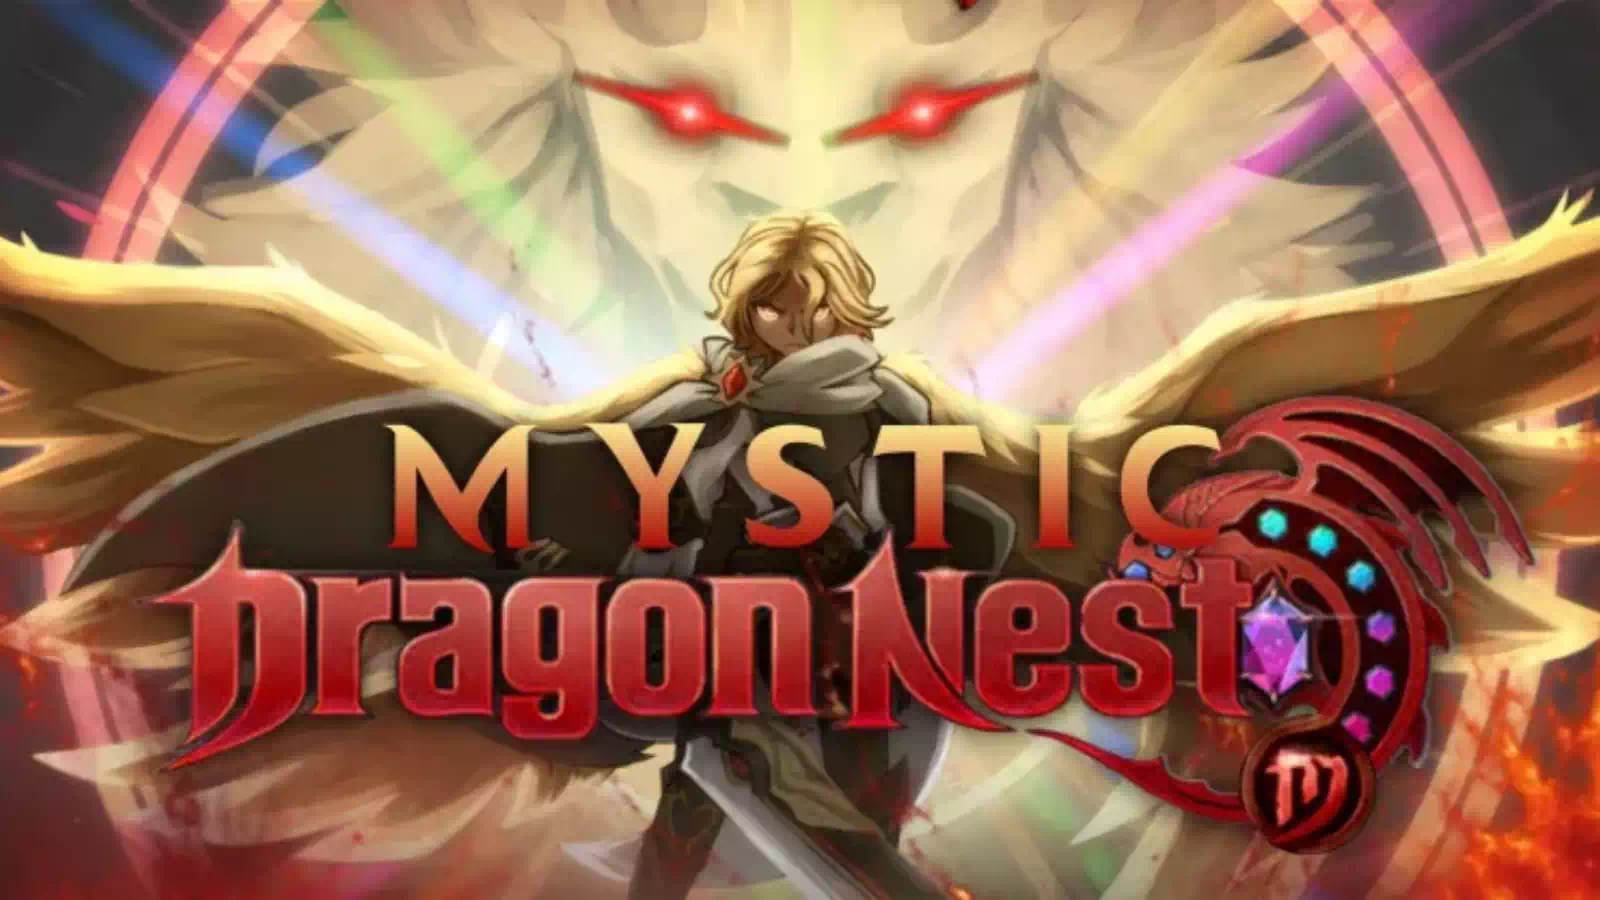 Mystic Dragon Nest Mobile